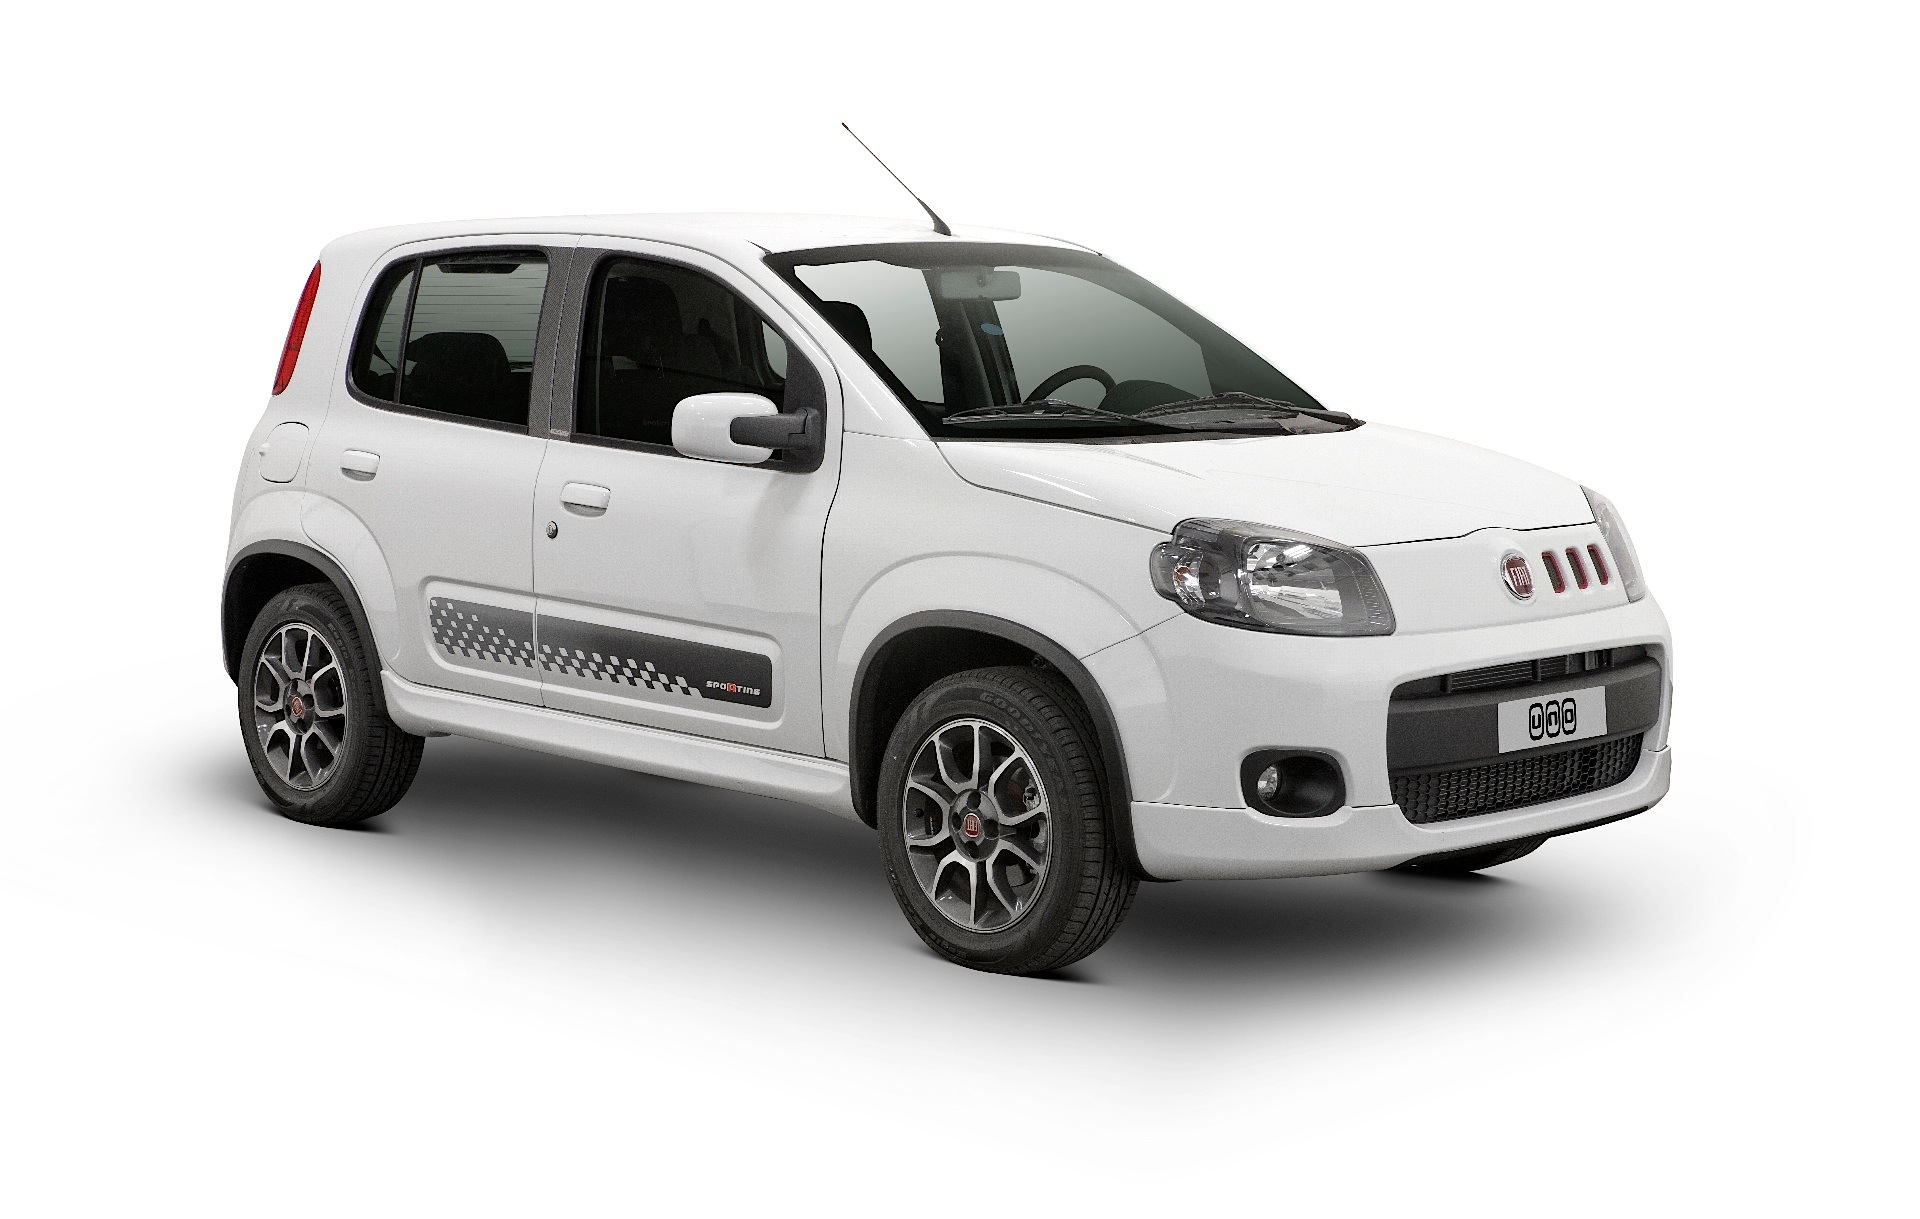 Carros usados Fiat Uno 2021 2020 2019 2018 2017 2016 2015